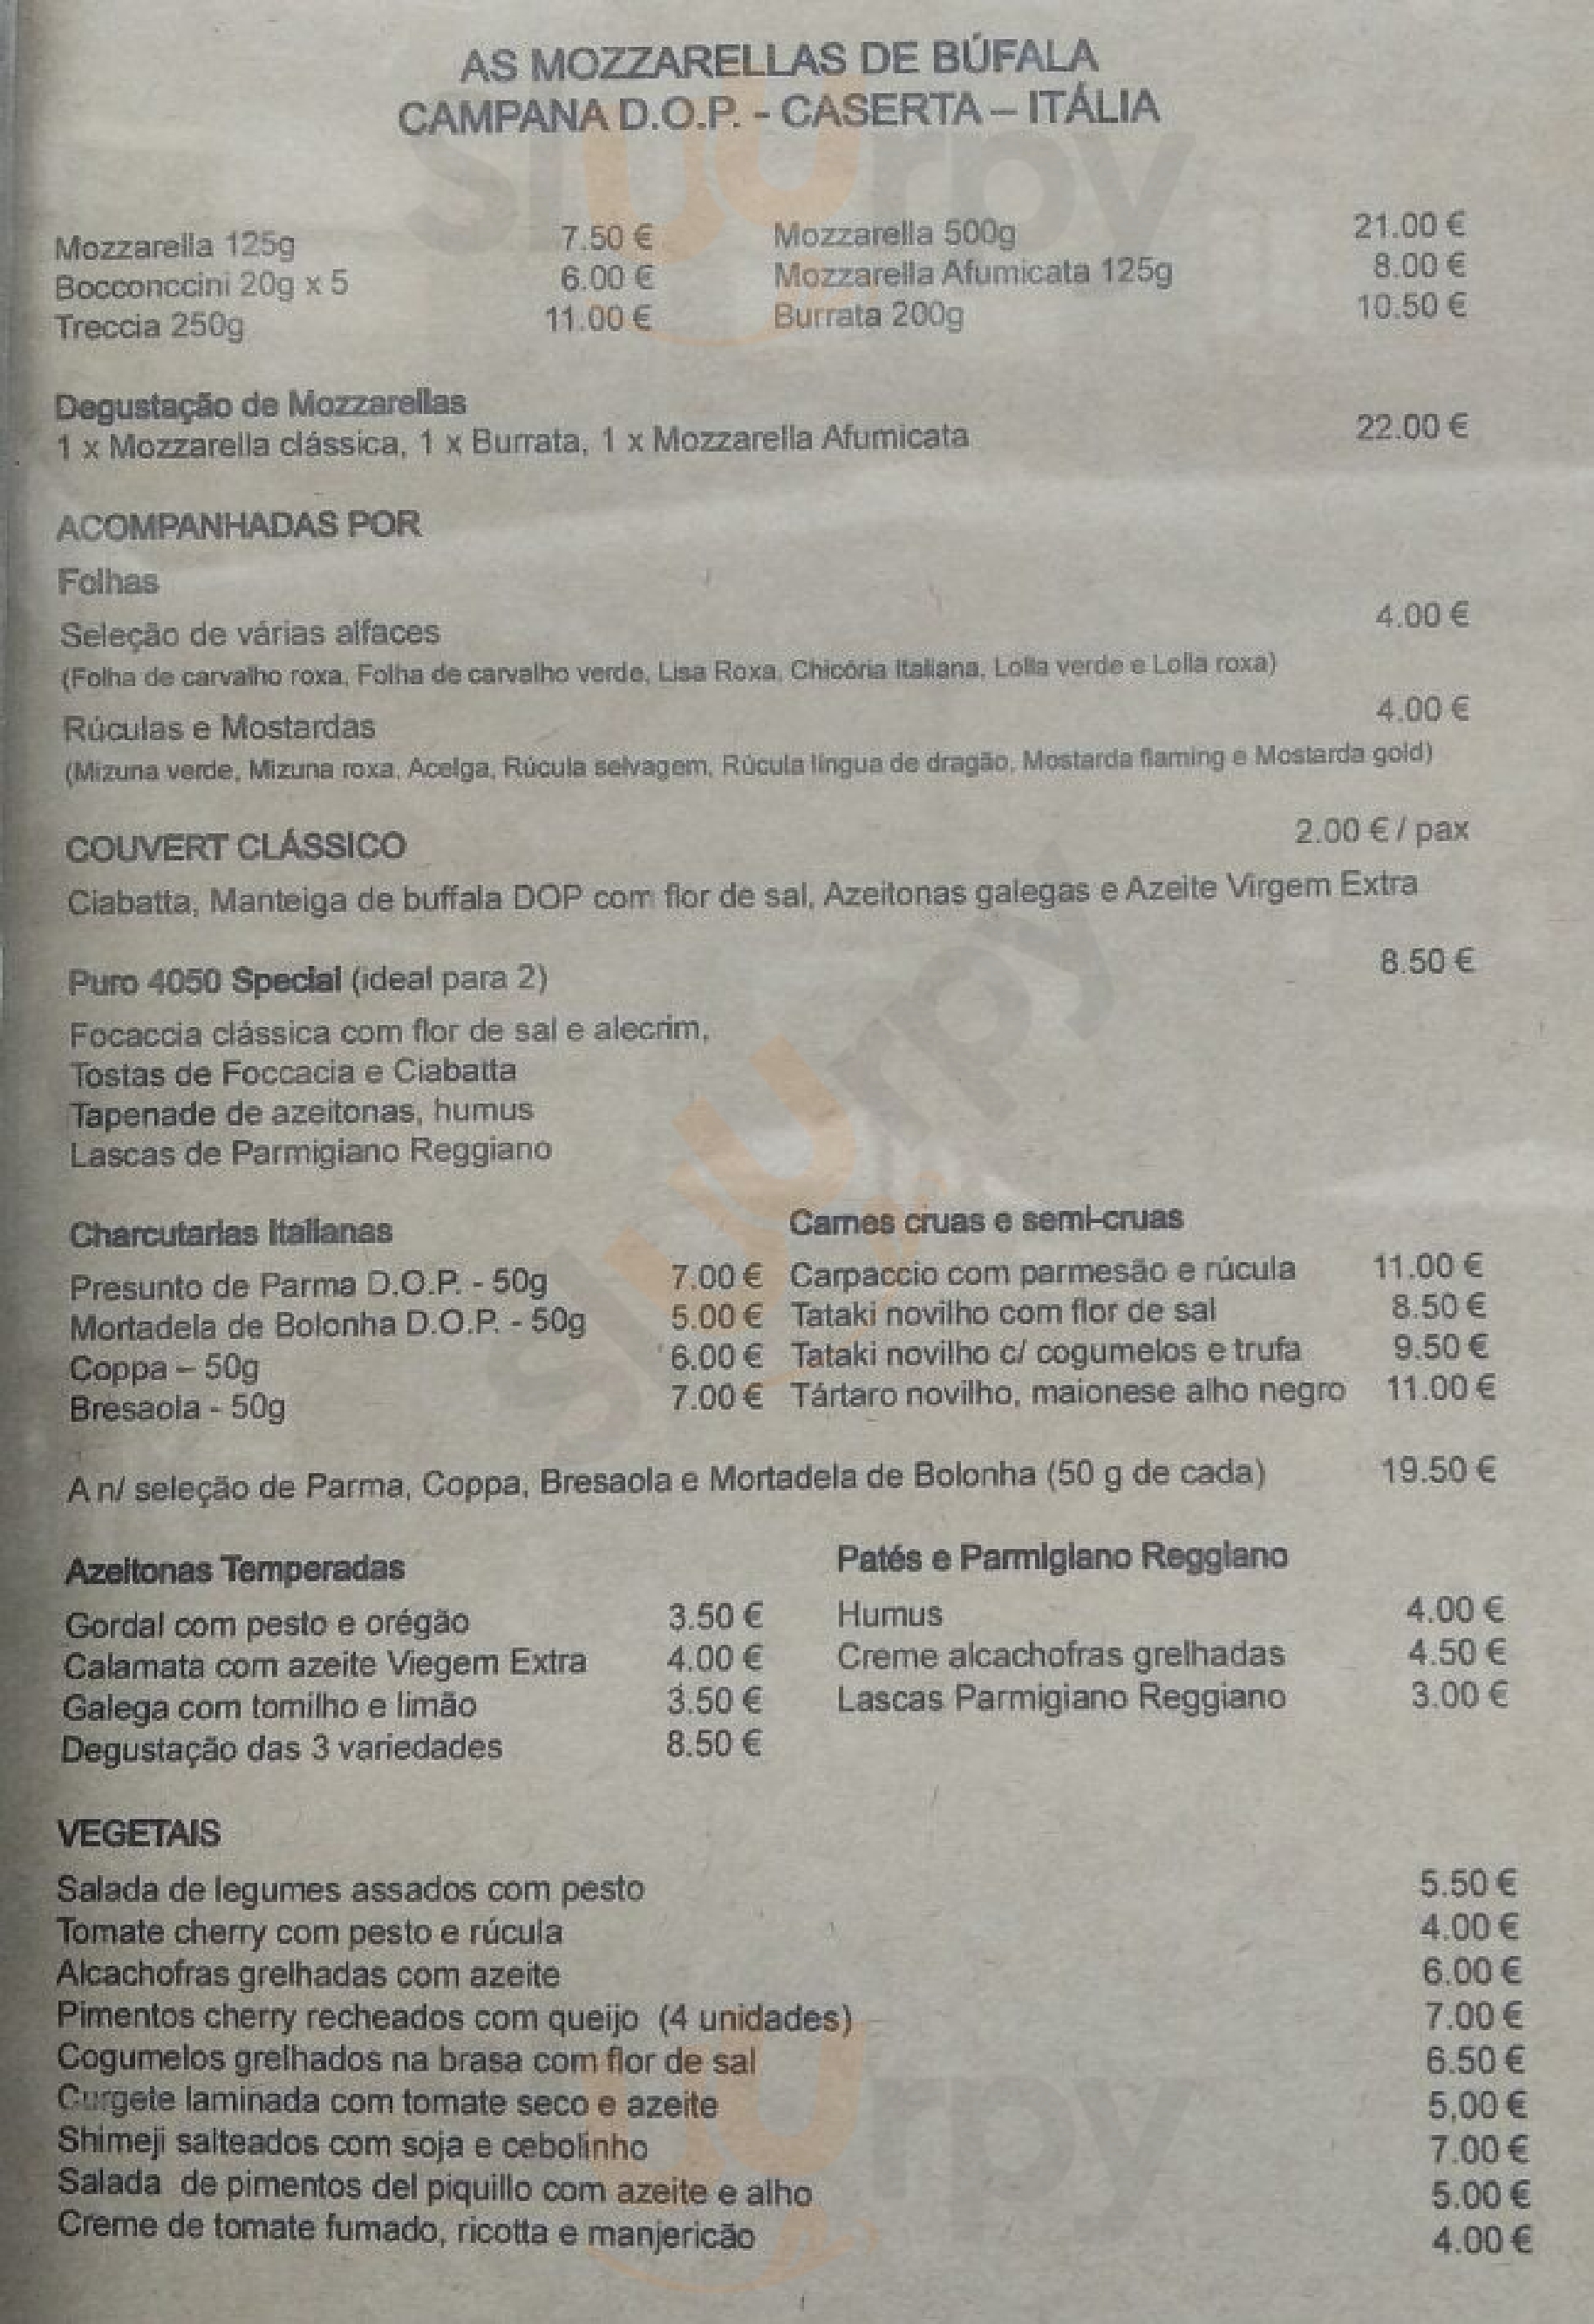 Puro 4050 - Restaurant & Mozzarella Bar Porto Menu - 1